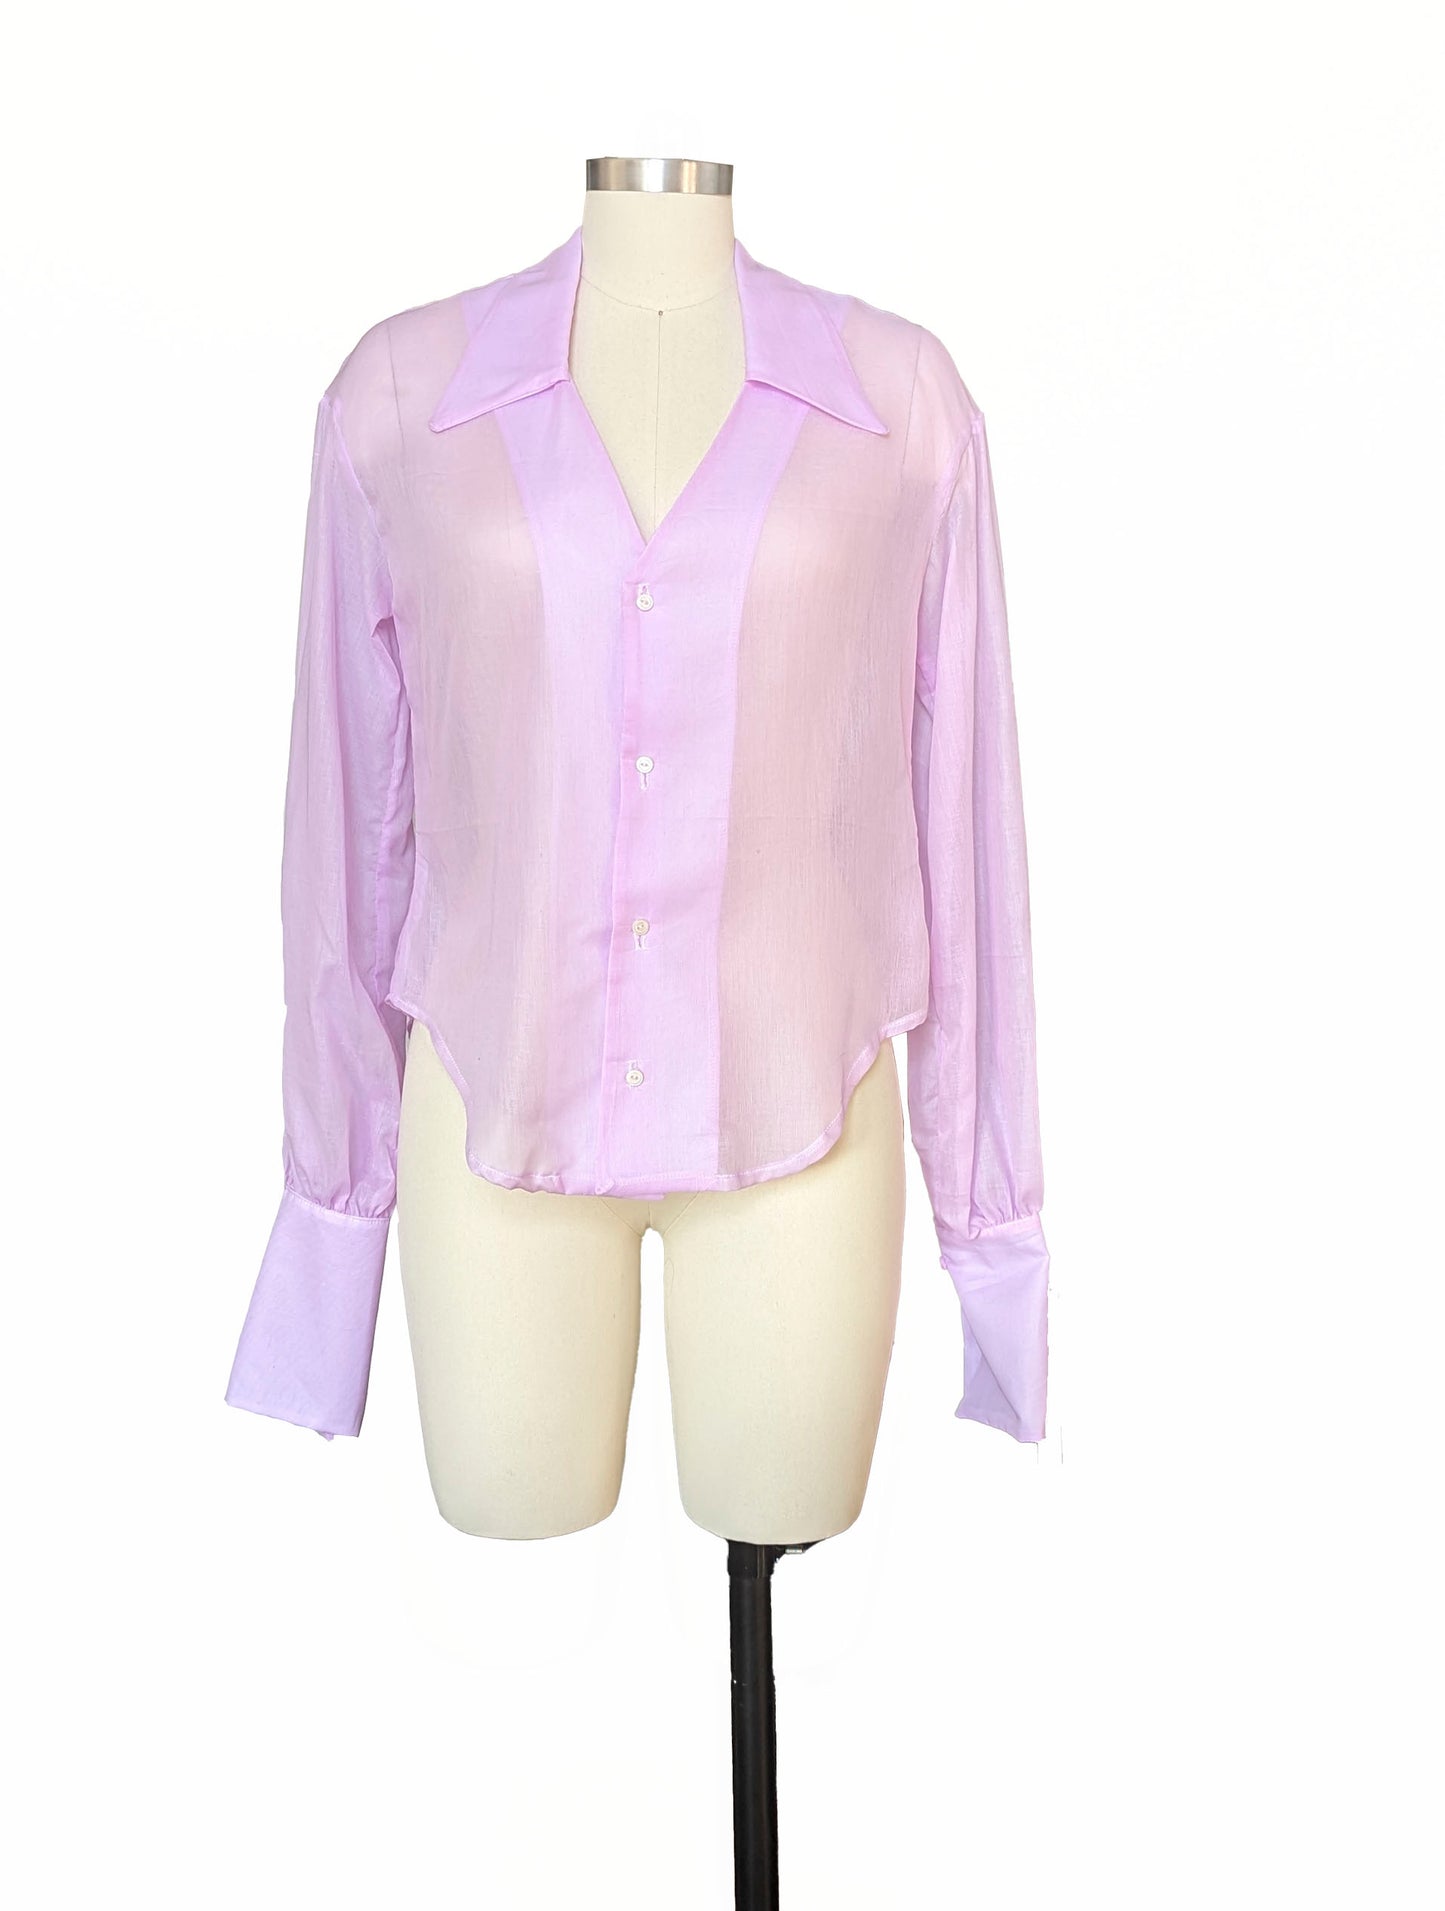 Heidi vintage button down long sleeve shirt lavender front